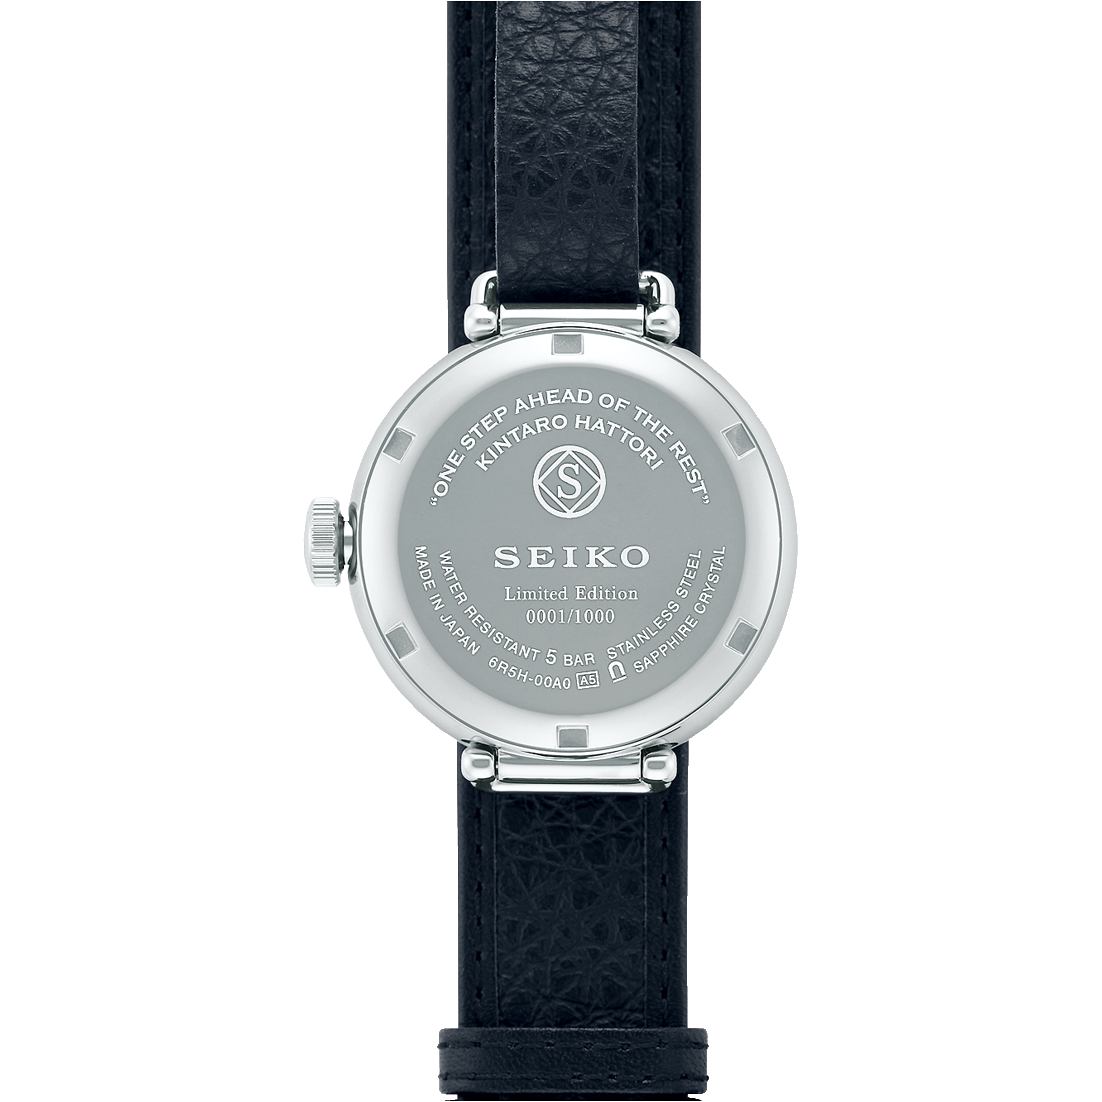 Seiko Presage Kintaro Hattori 100th Anniversary Limited Edition Watch-SPB441